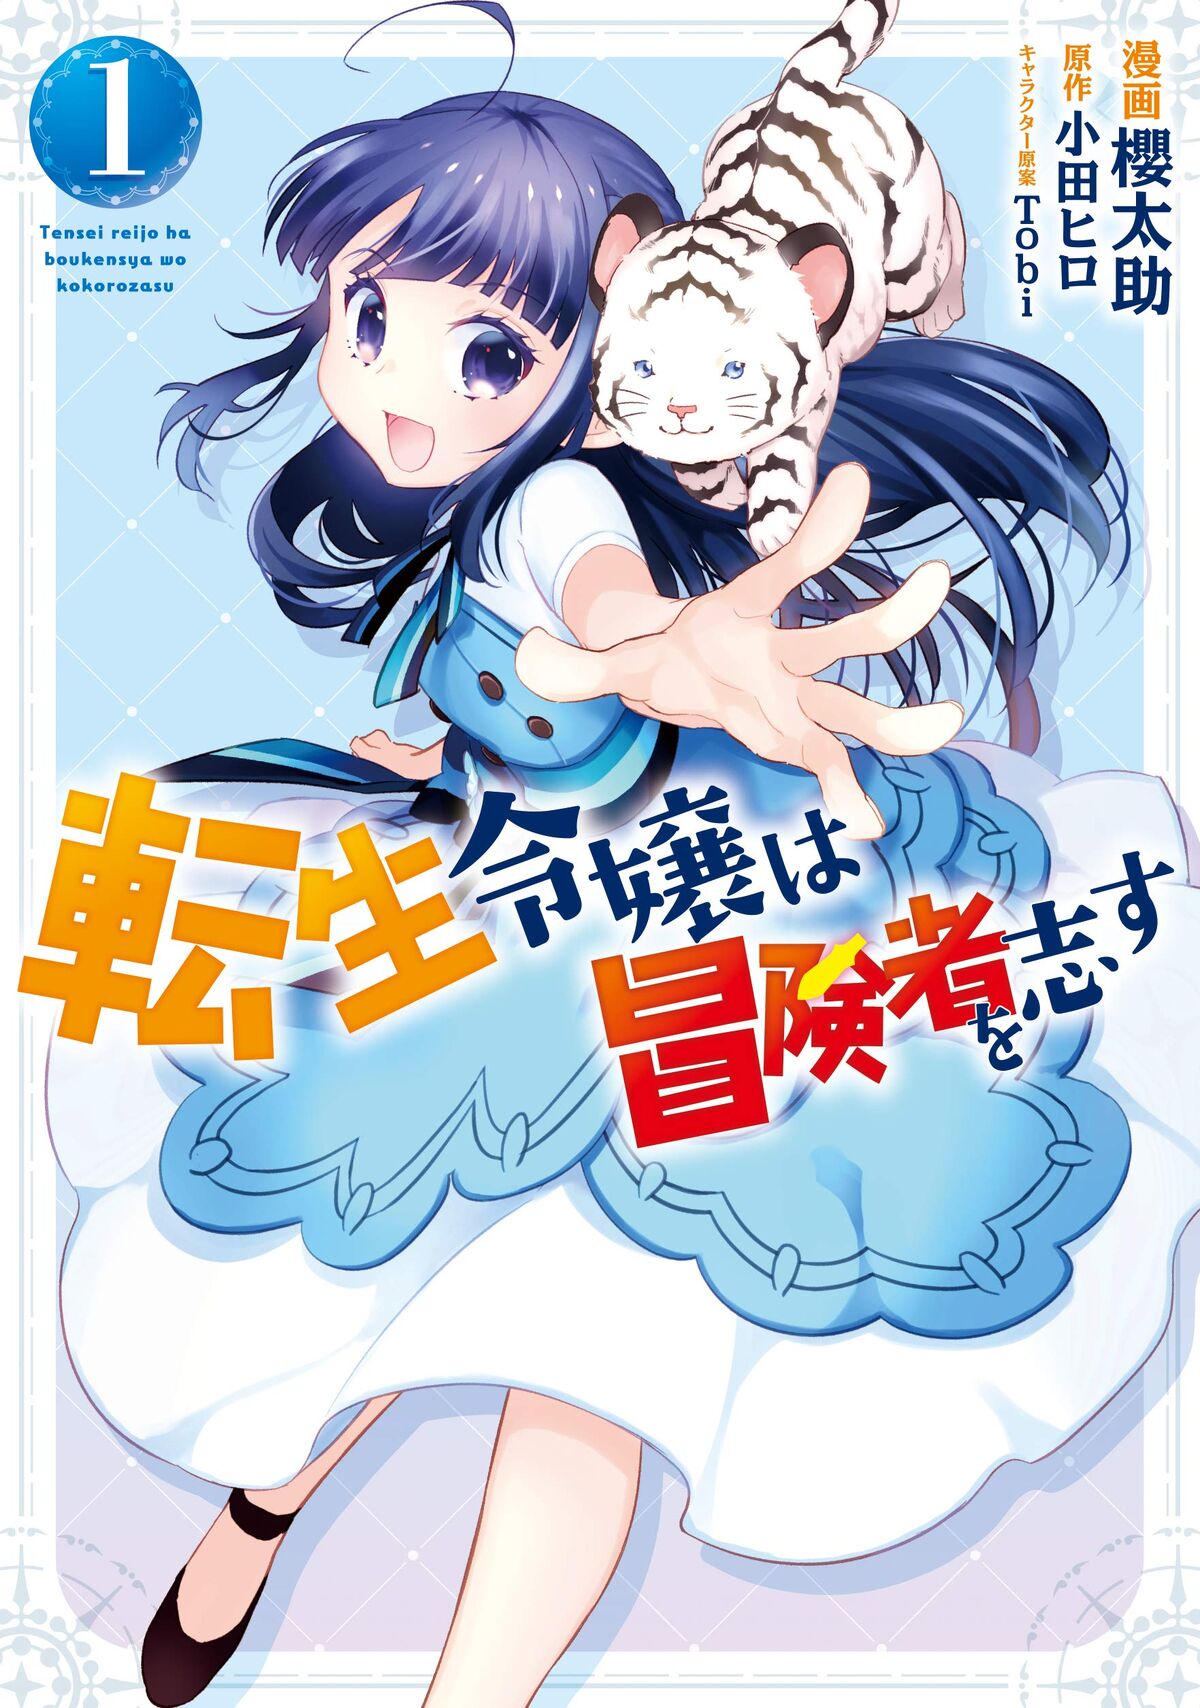 Tensei Kenja wa Musume to Kurasu Image by Kabocha #2570330 - Zerochan Anime  Image Board